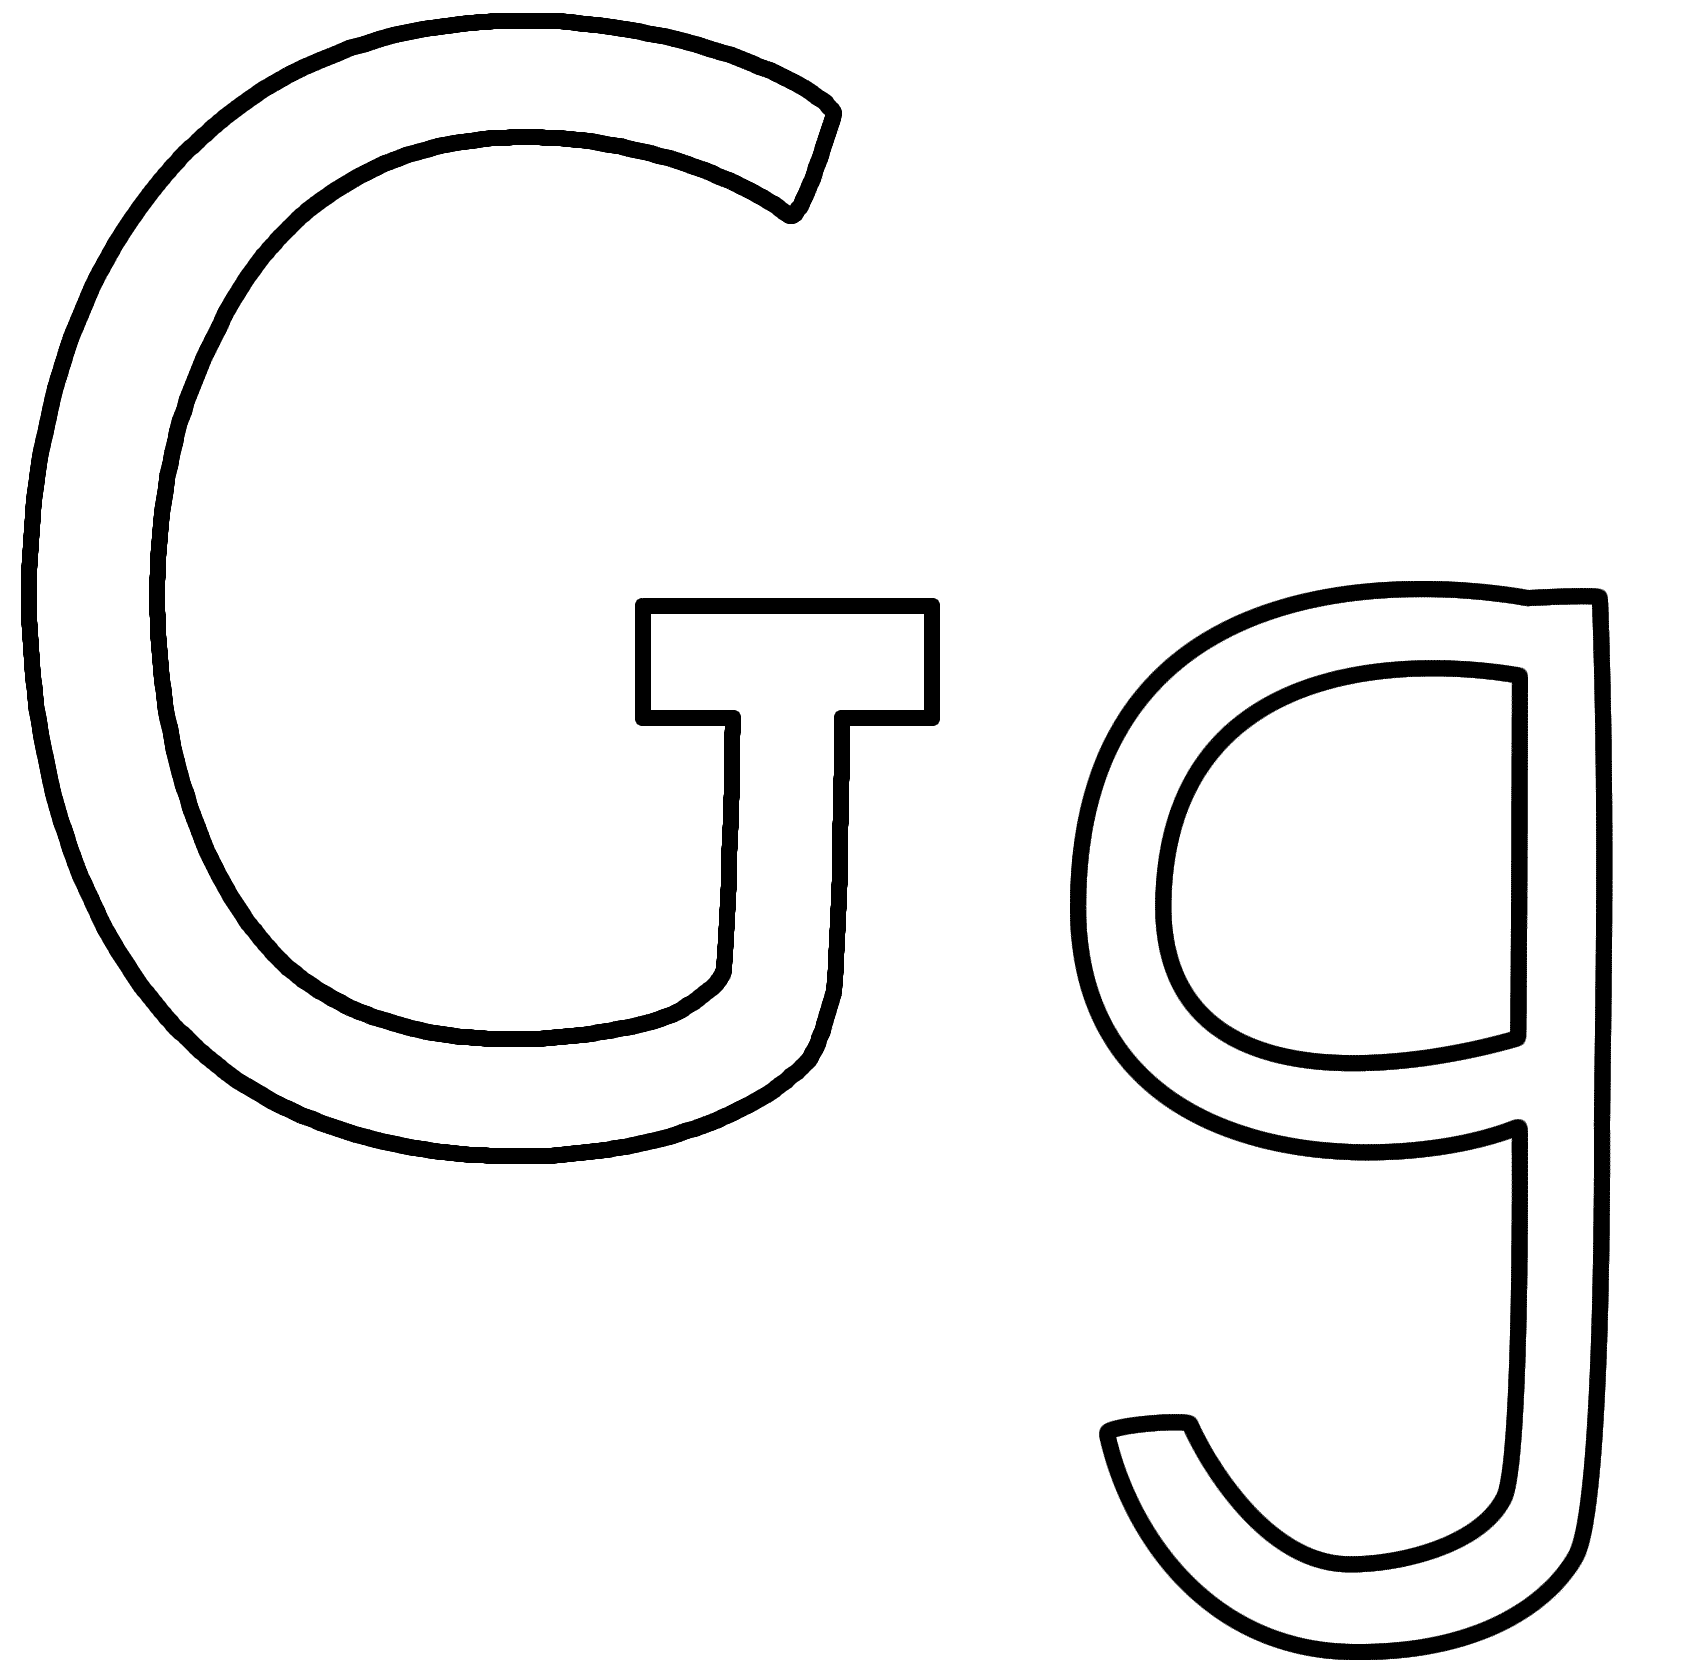 Letter G - Coloring Page (Alphabet)